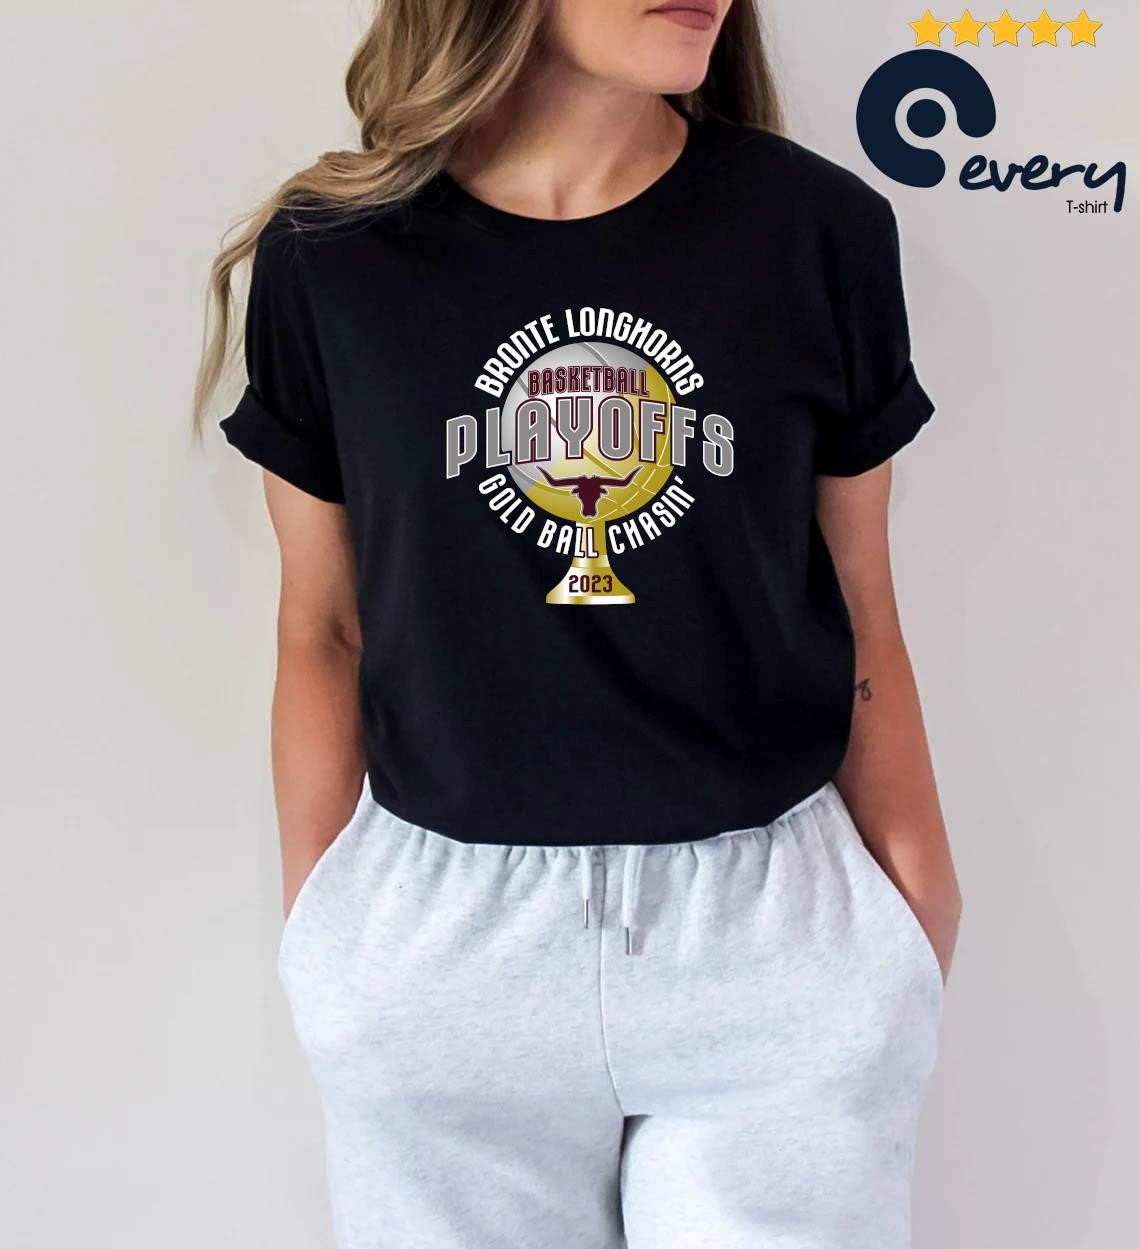 Bronte Longhorns Gold Ball Chasin' Basketball Playoffs 2023 Shirt